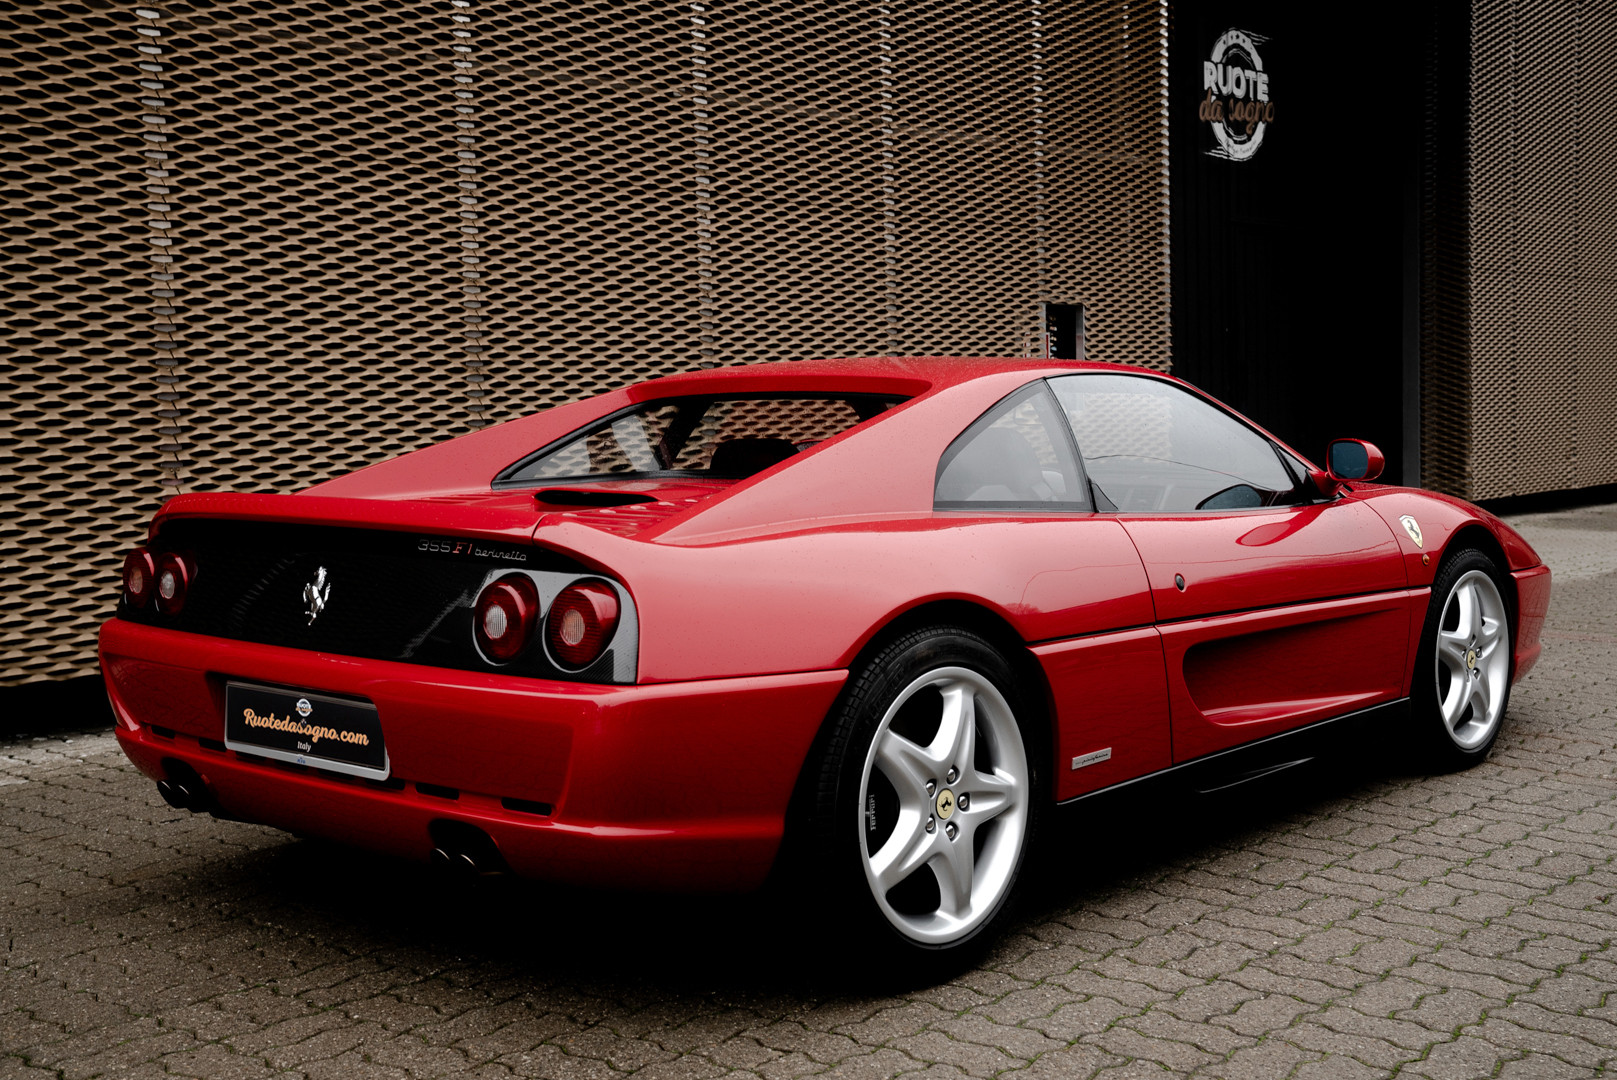 1998 Ferrari F 355 Berlinetta F1 - Ferrari - Classic cars - Ruote da Sogno